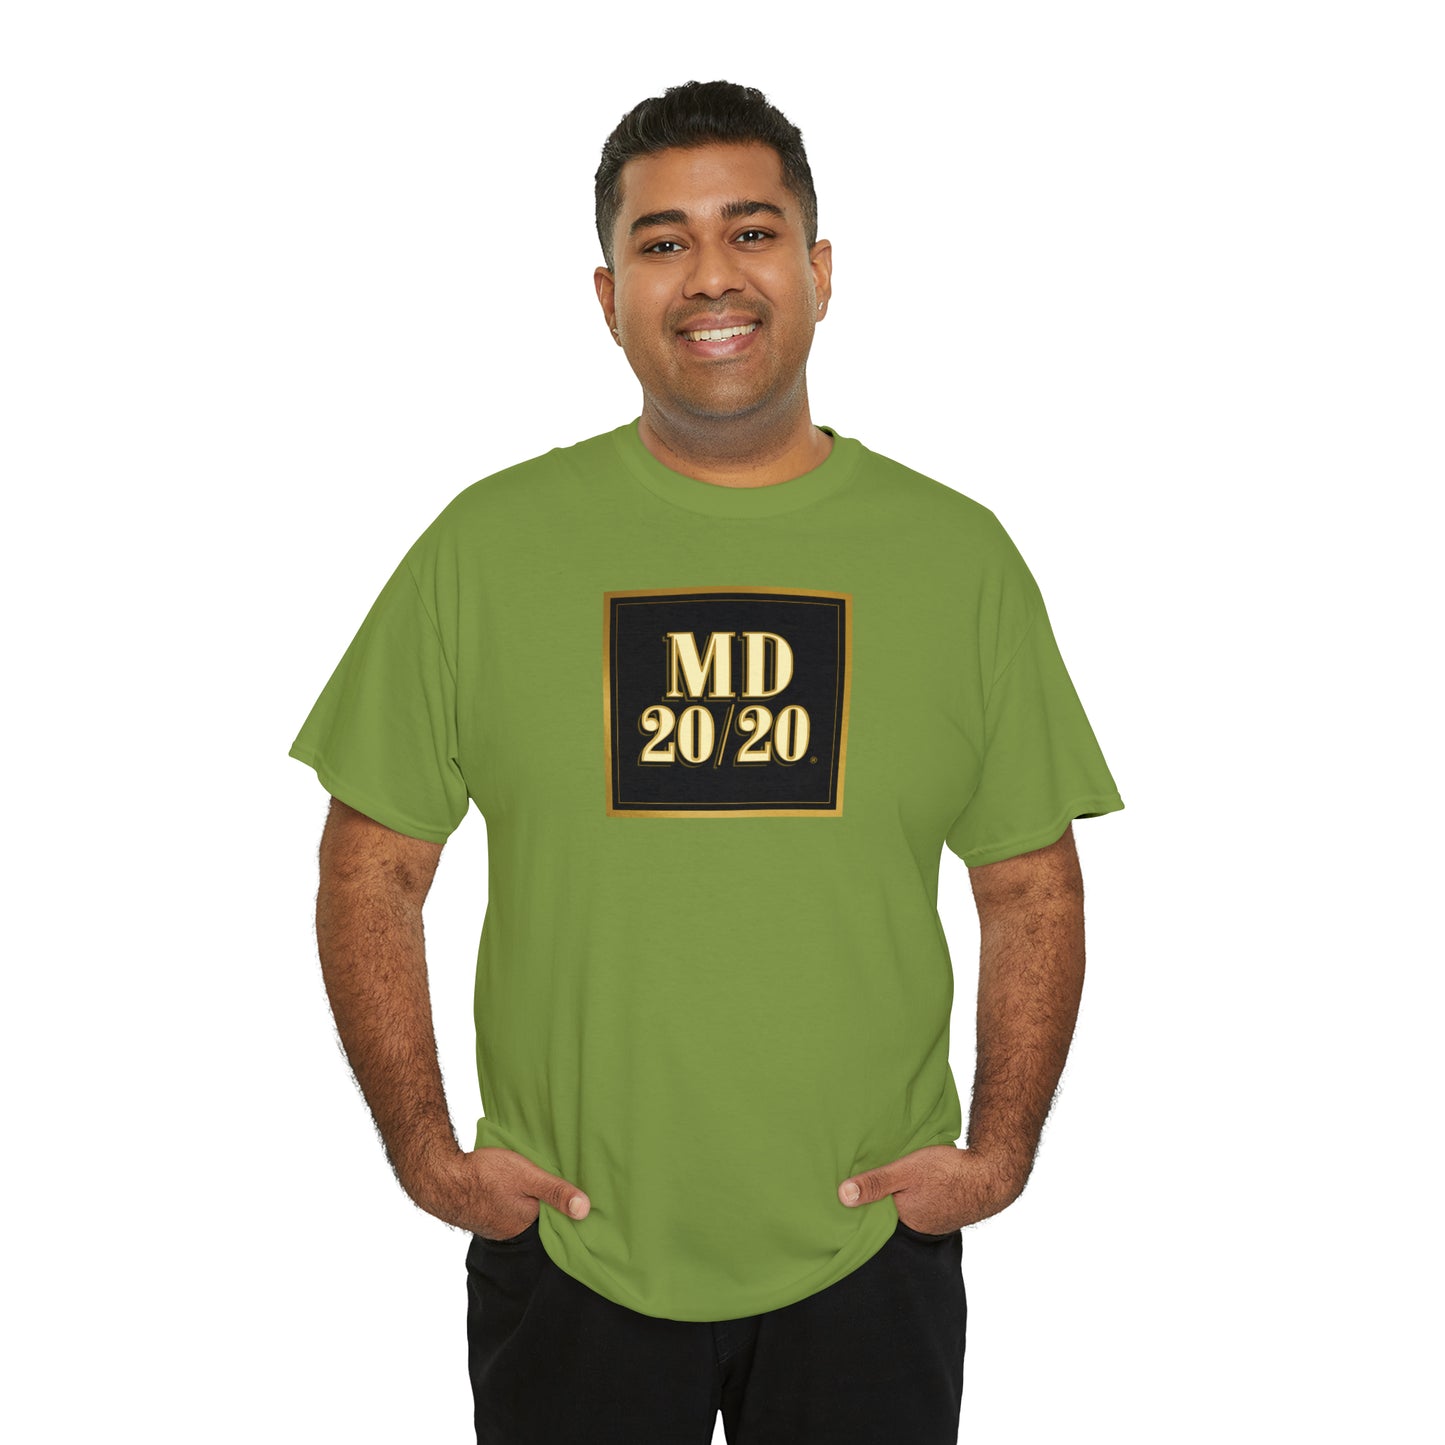 MD 20/20 T-Shirt